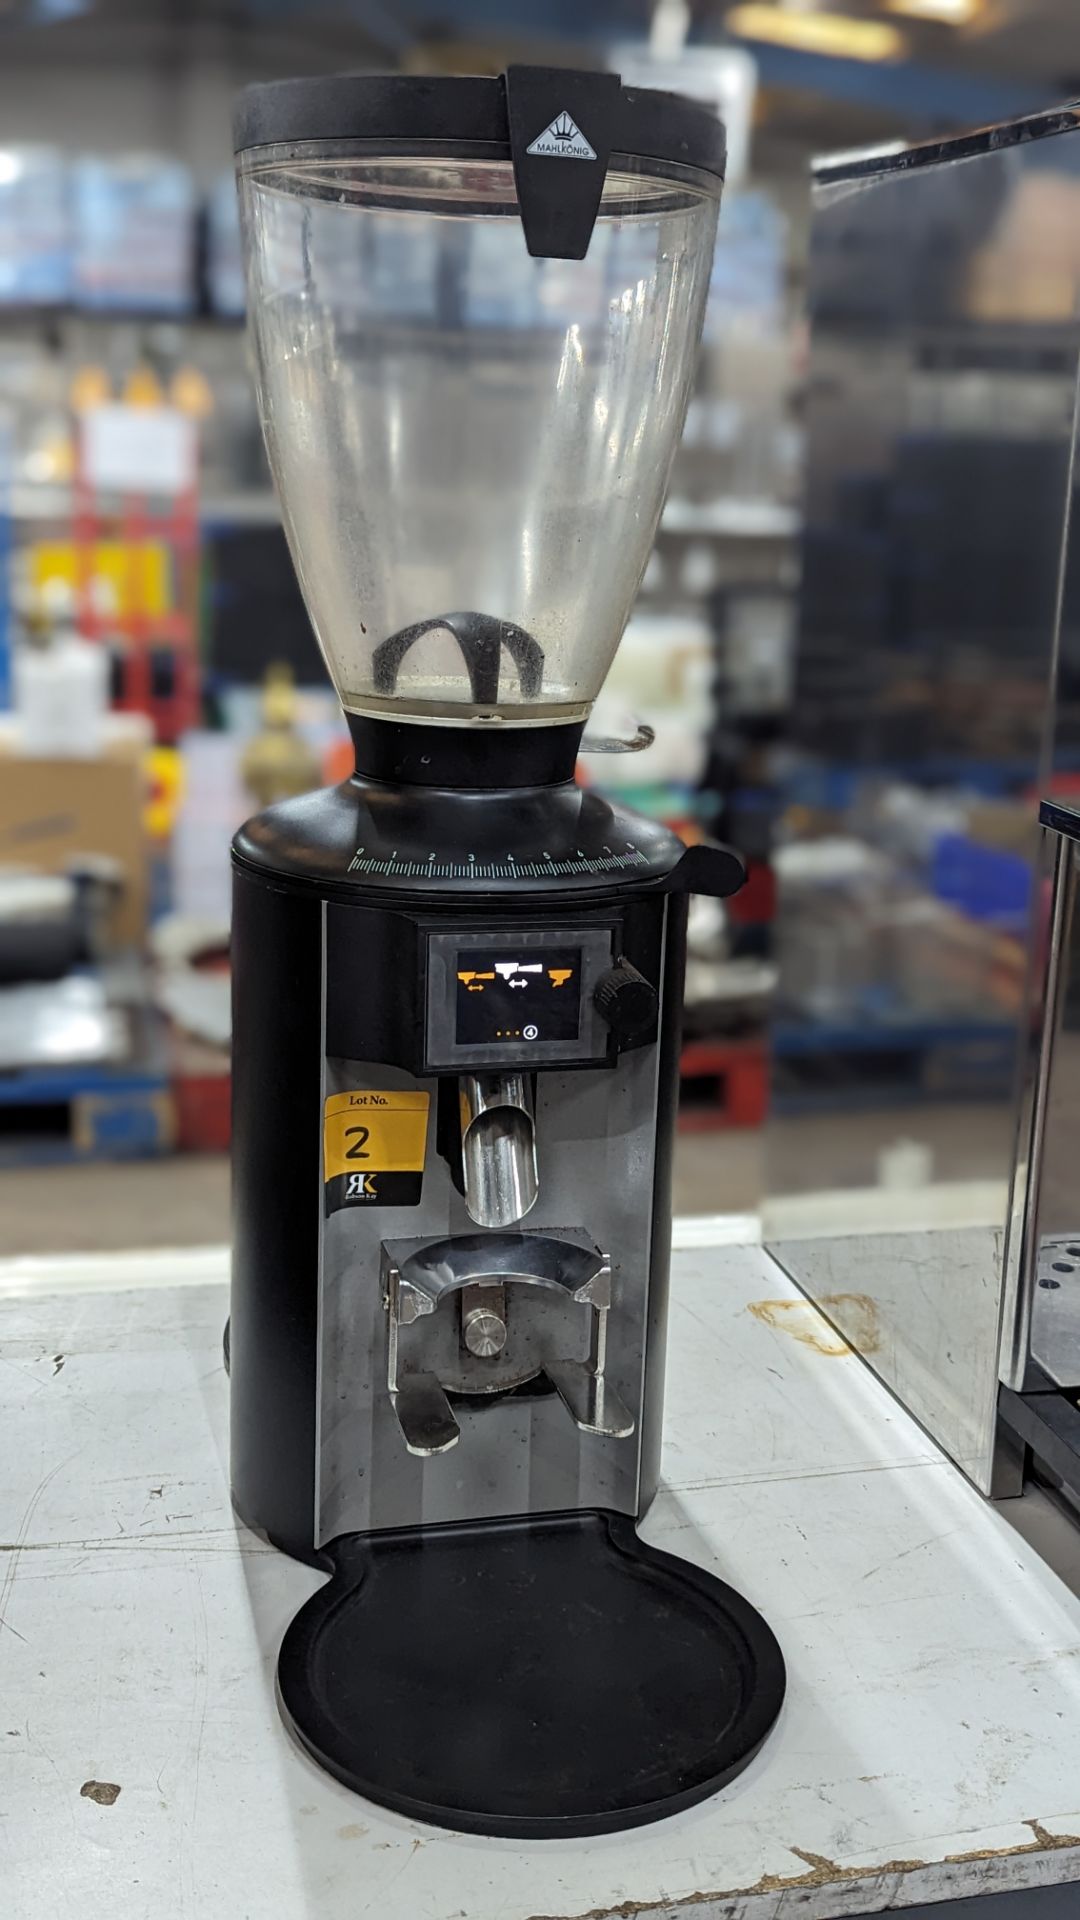 Anfim Pratica commercial coffee grinder with digital display, model AE652.4B